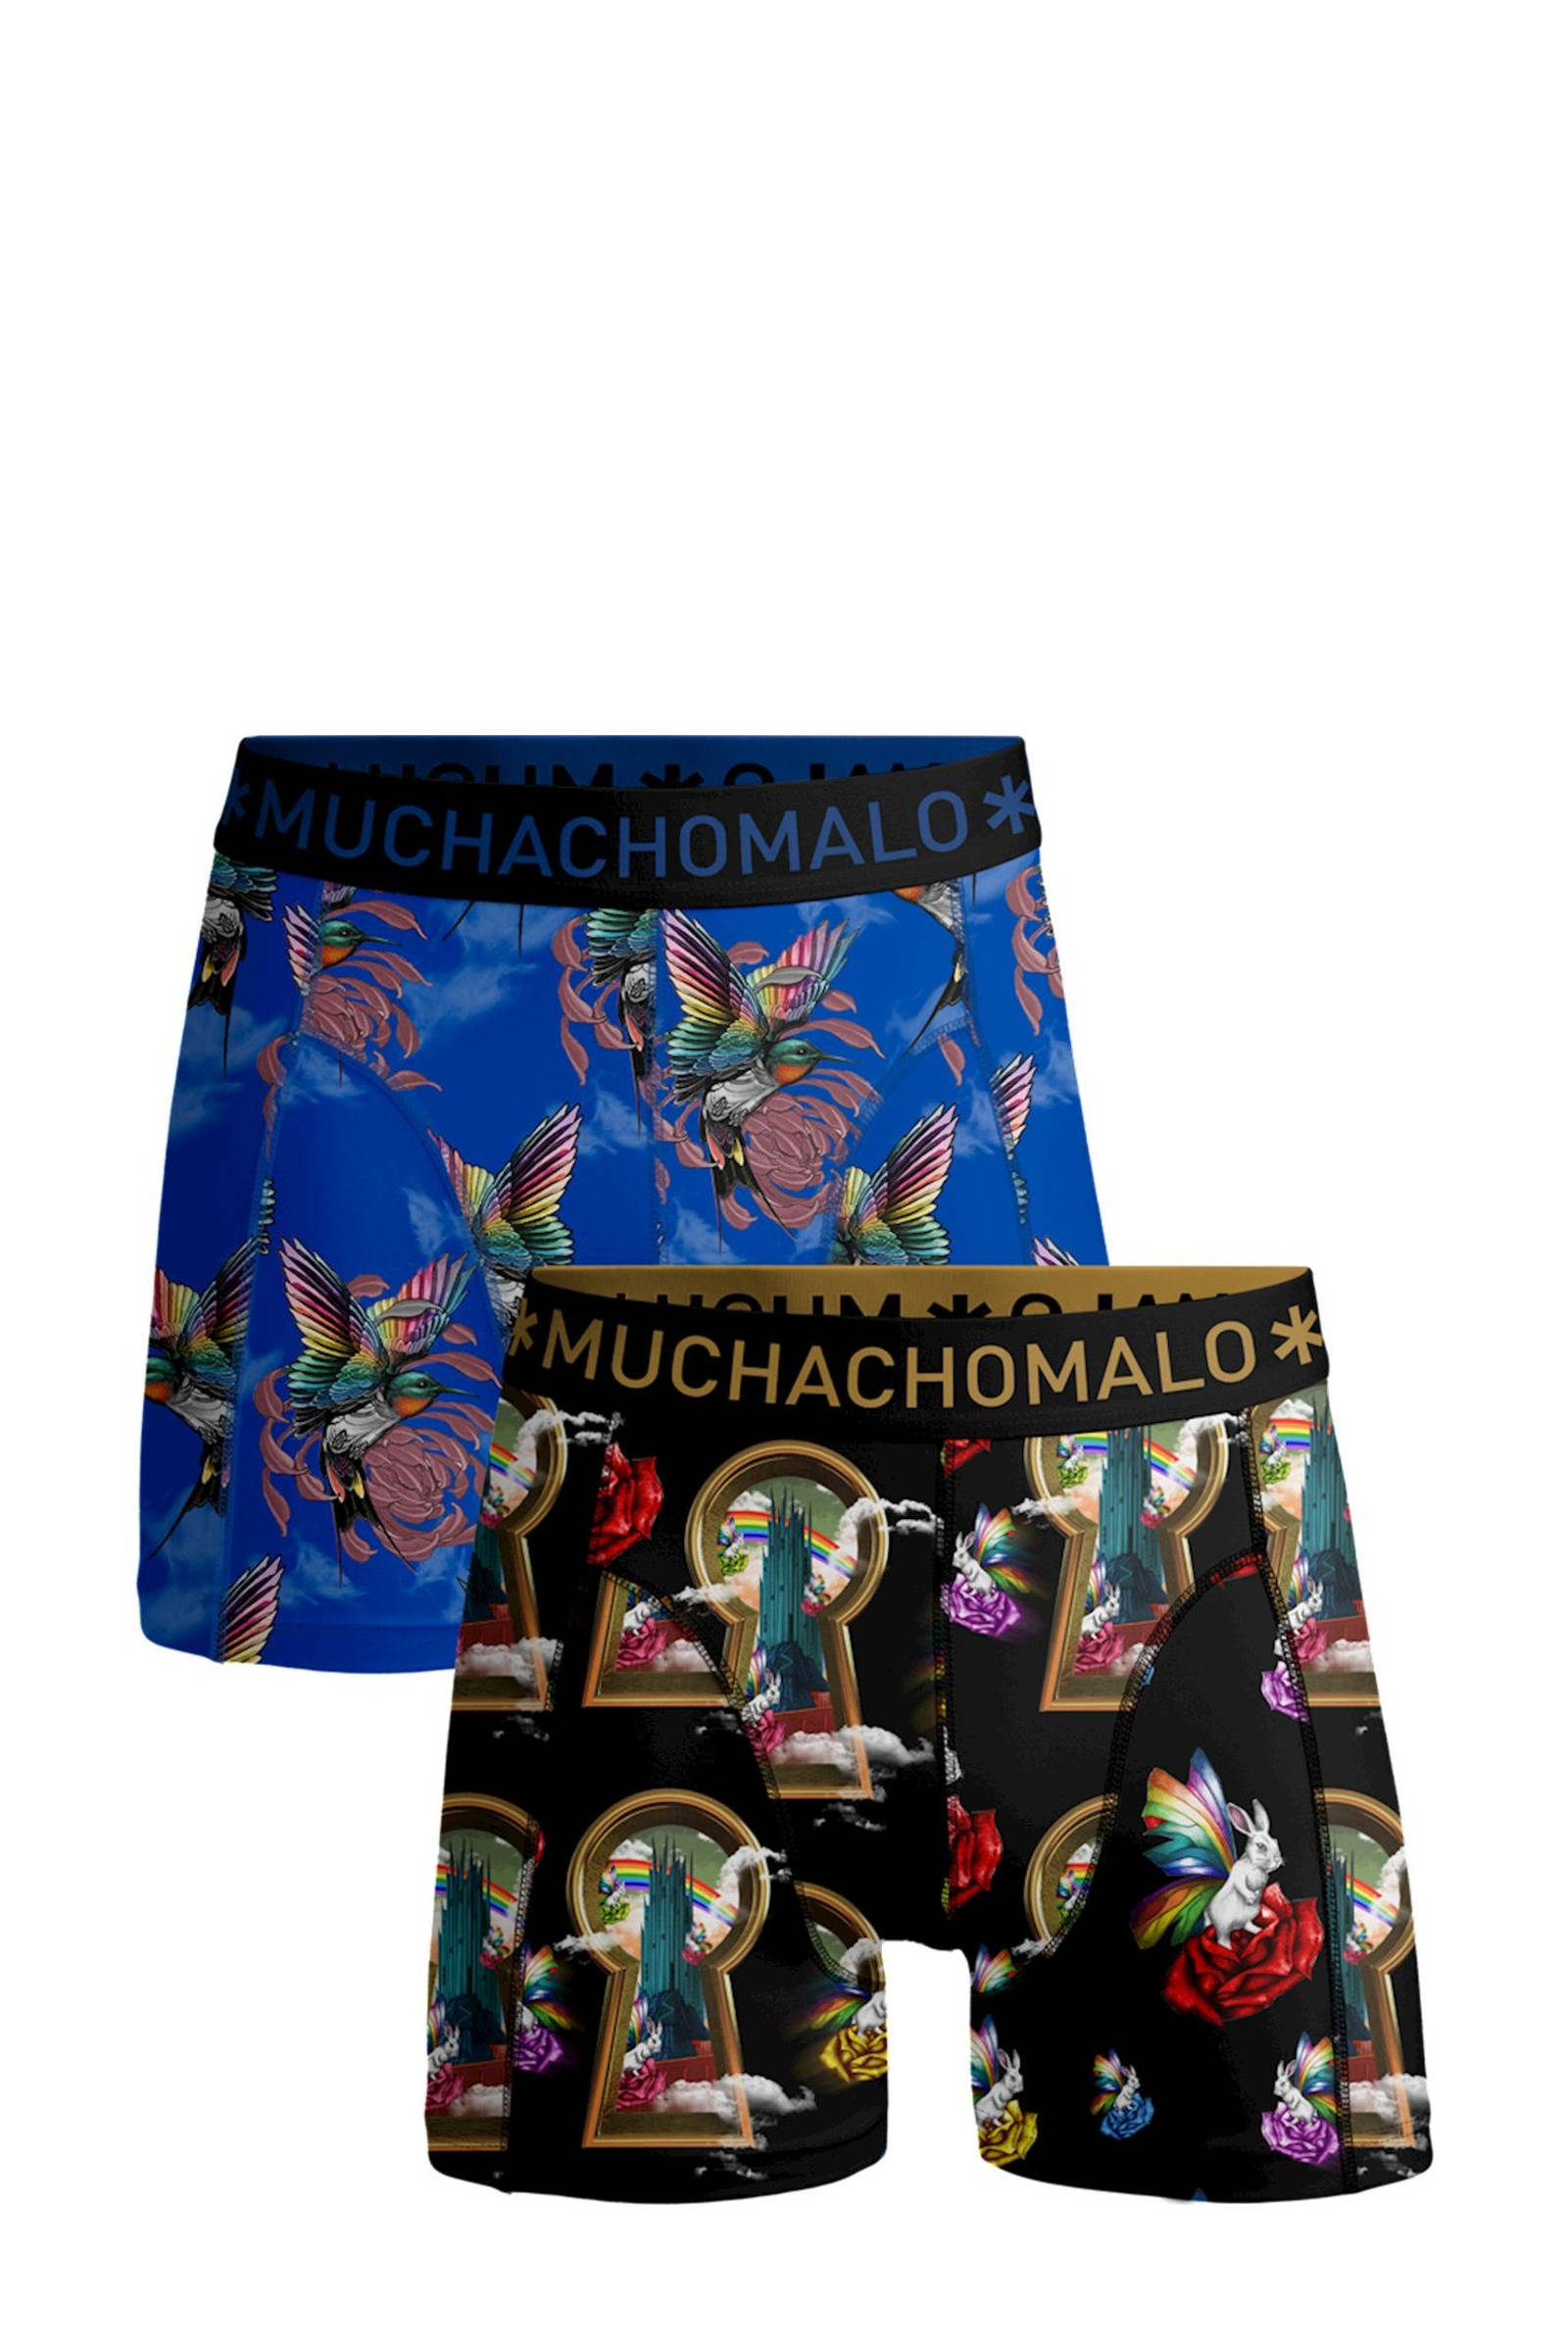 Muchachomalo Boxershorts Shorts Over The Rainbow 2 Pack Zwart online kopen